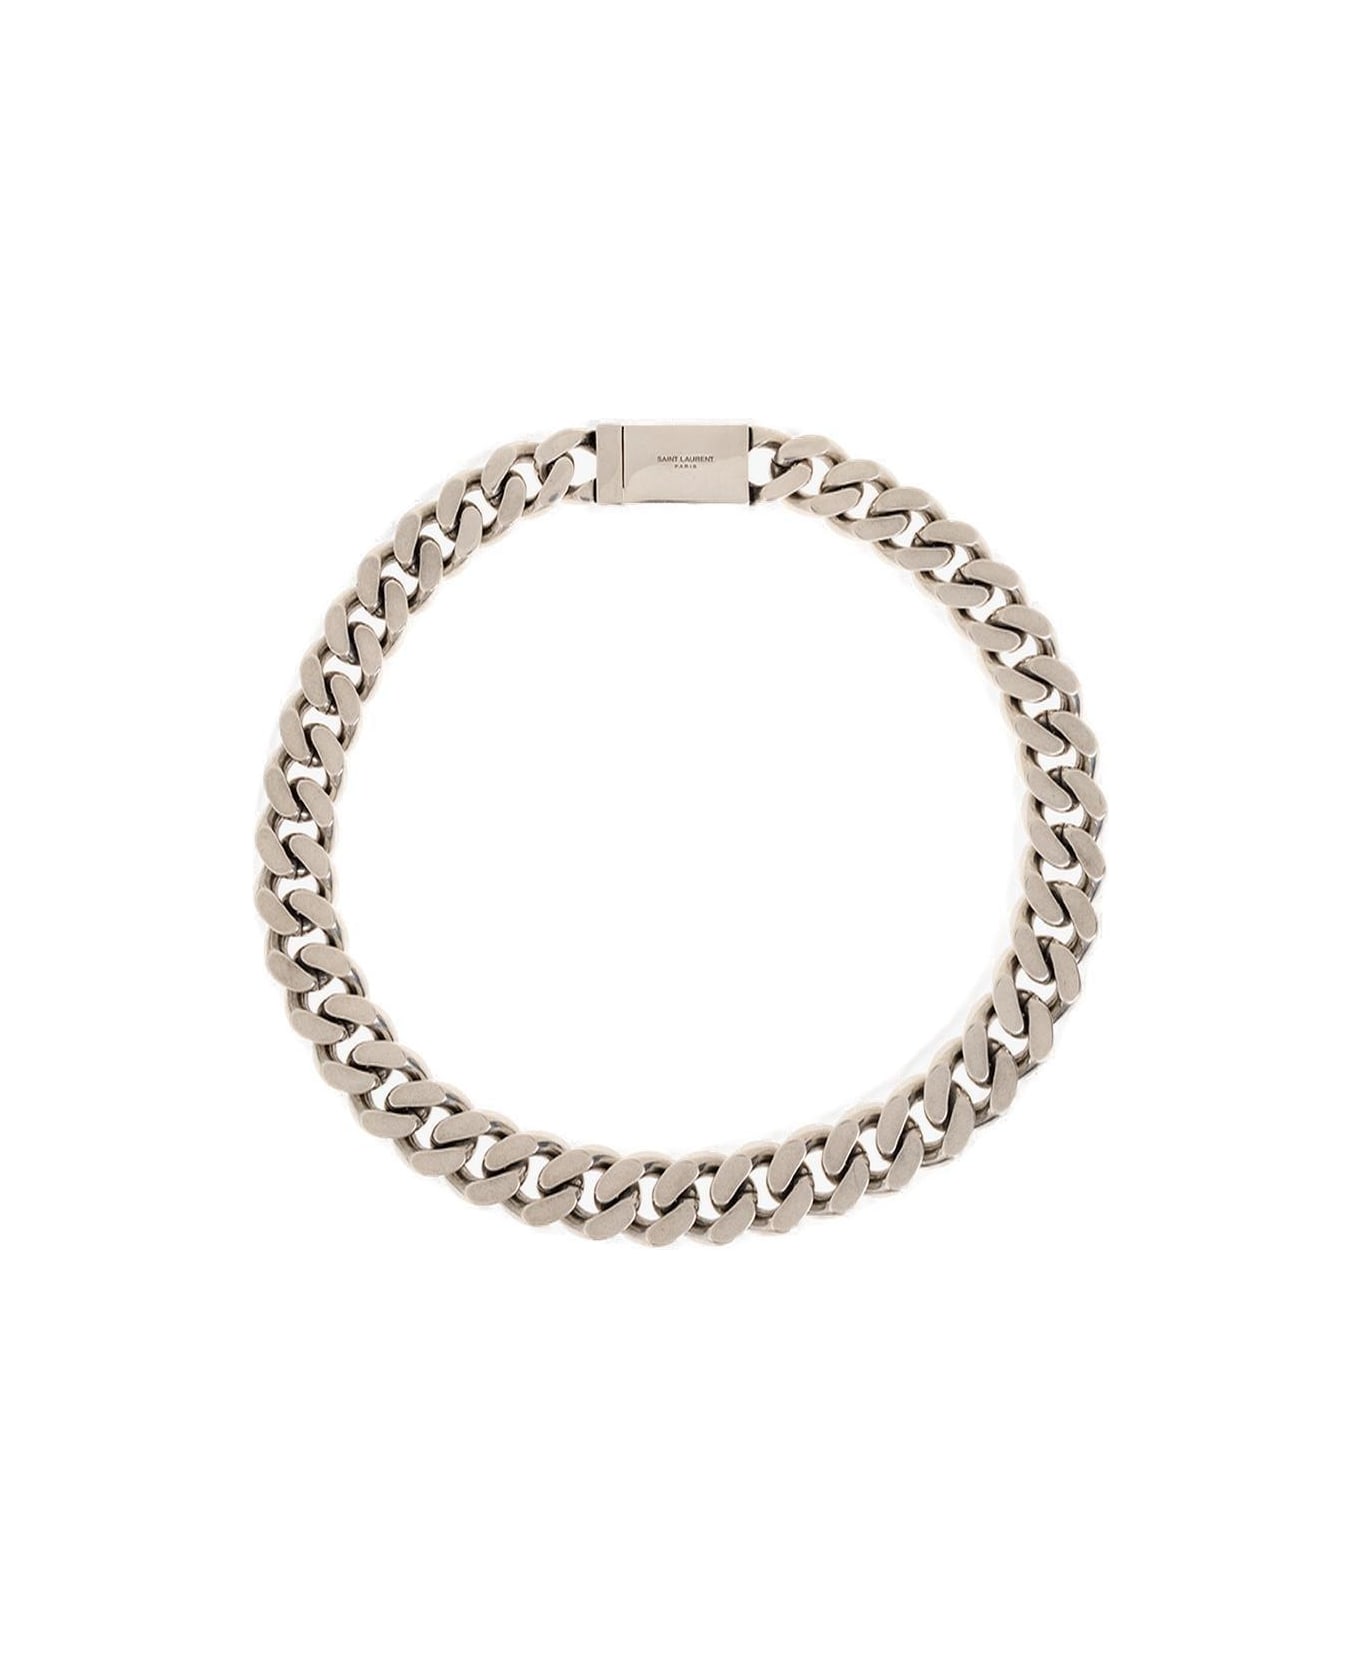 Saint Laurent Logo Engraved Chained Necklace - Grigio